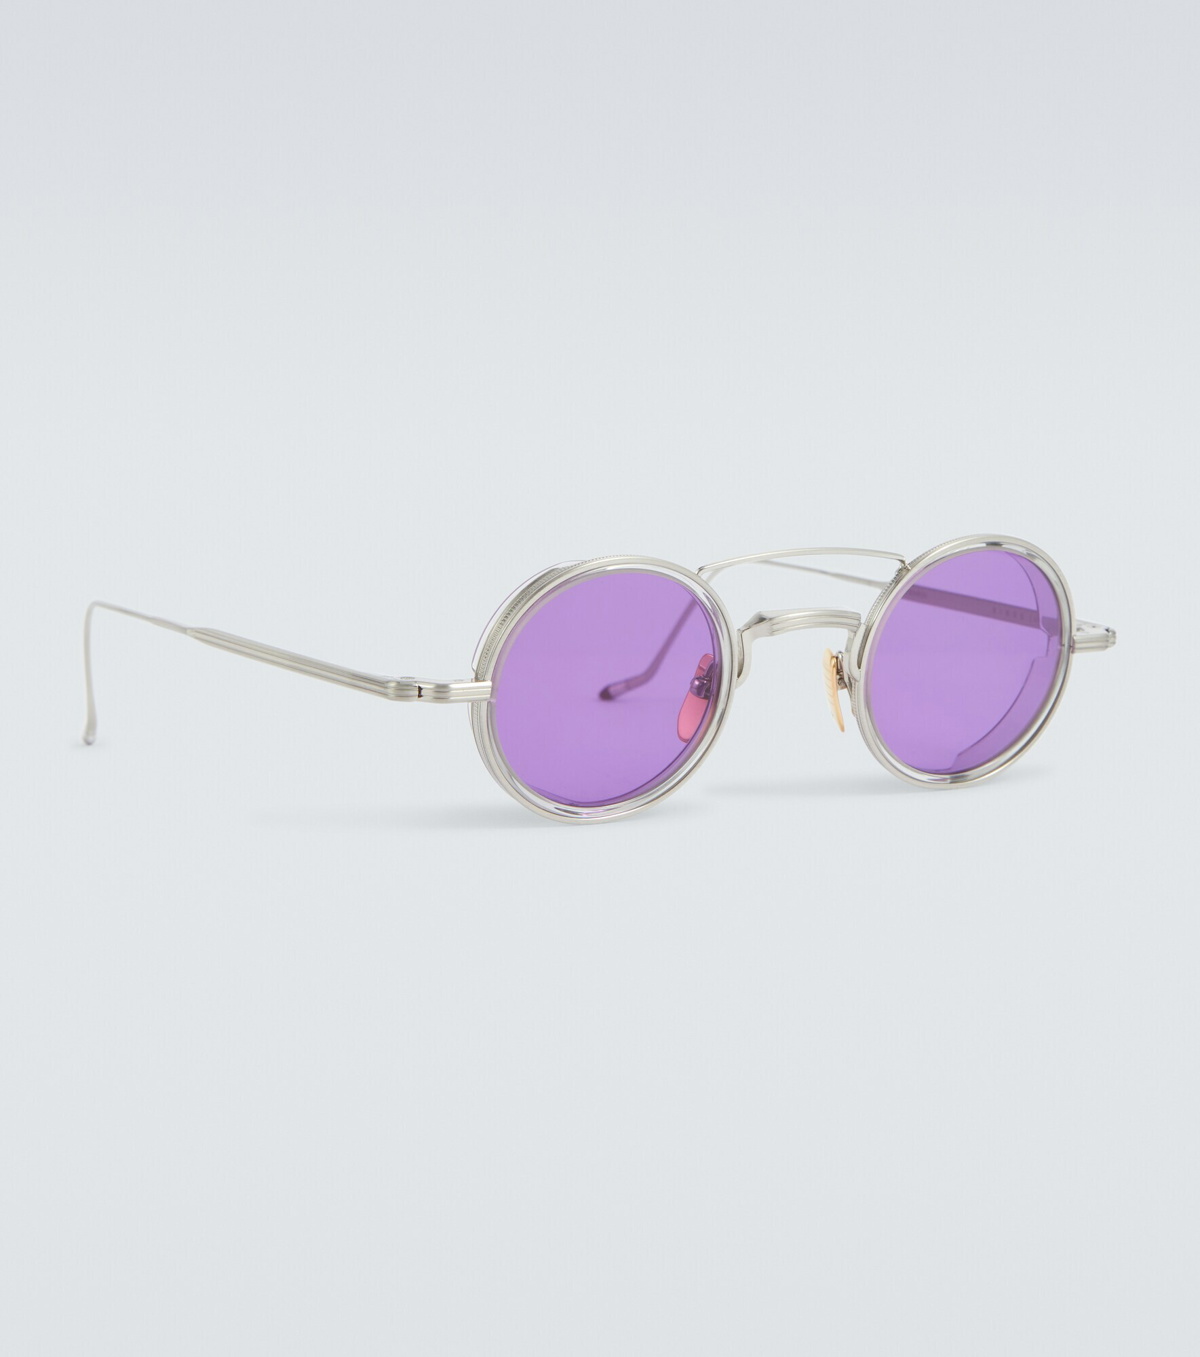 The Ringo Square Sunglasses